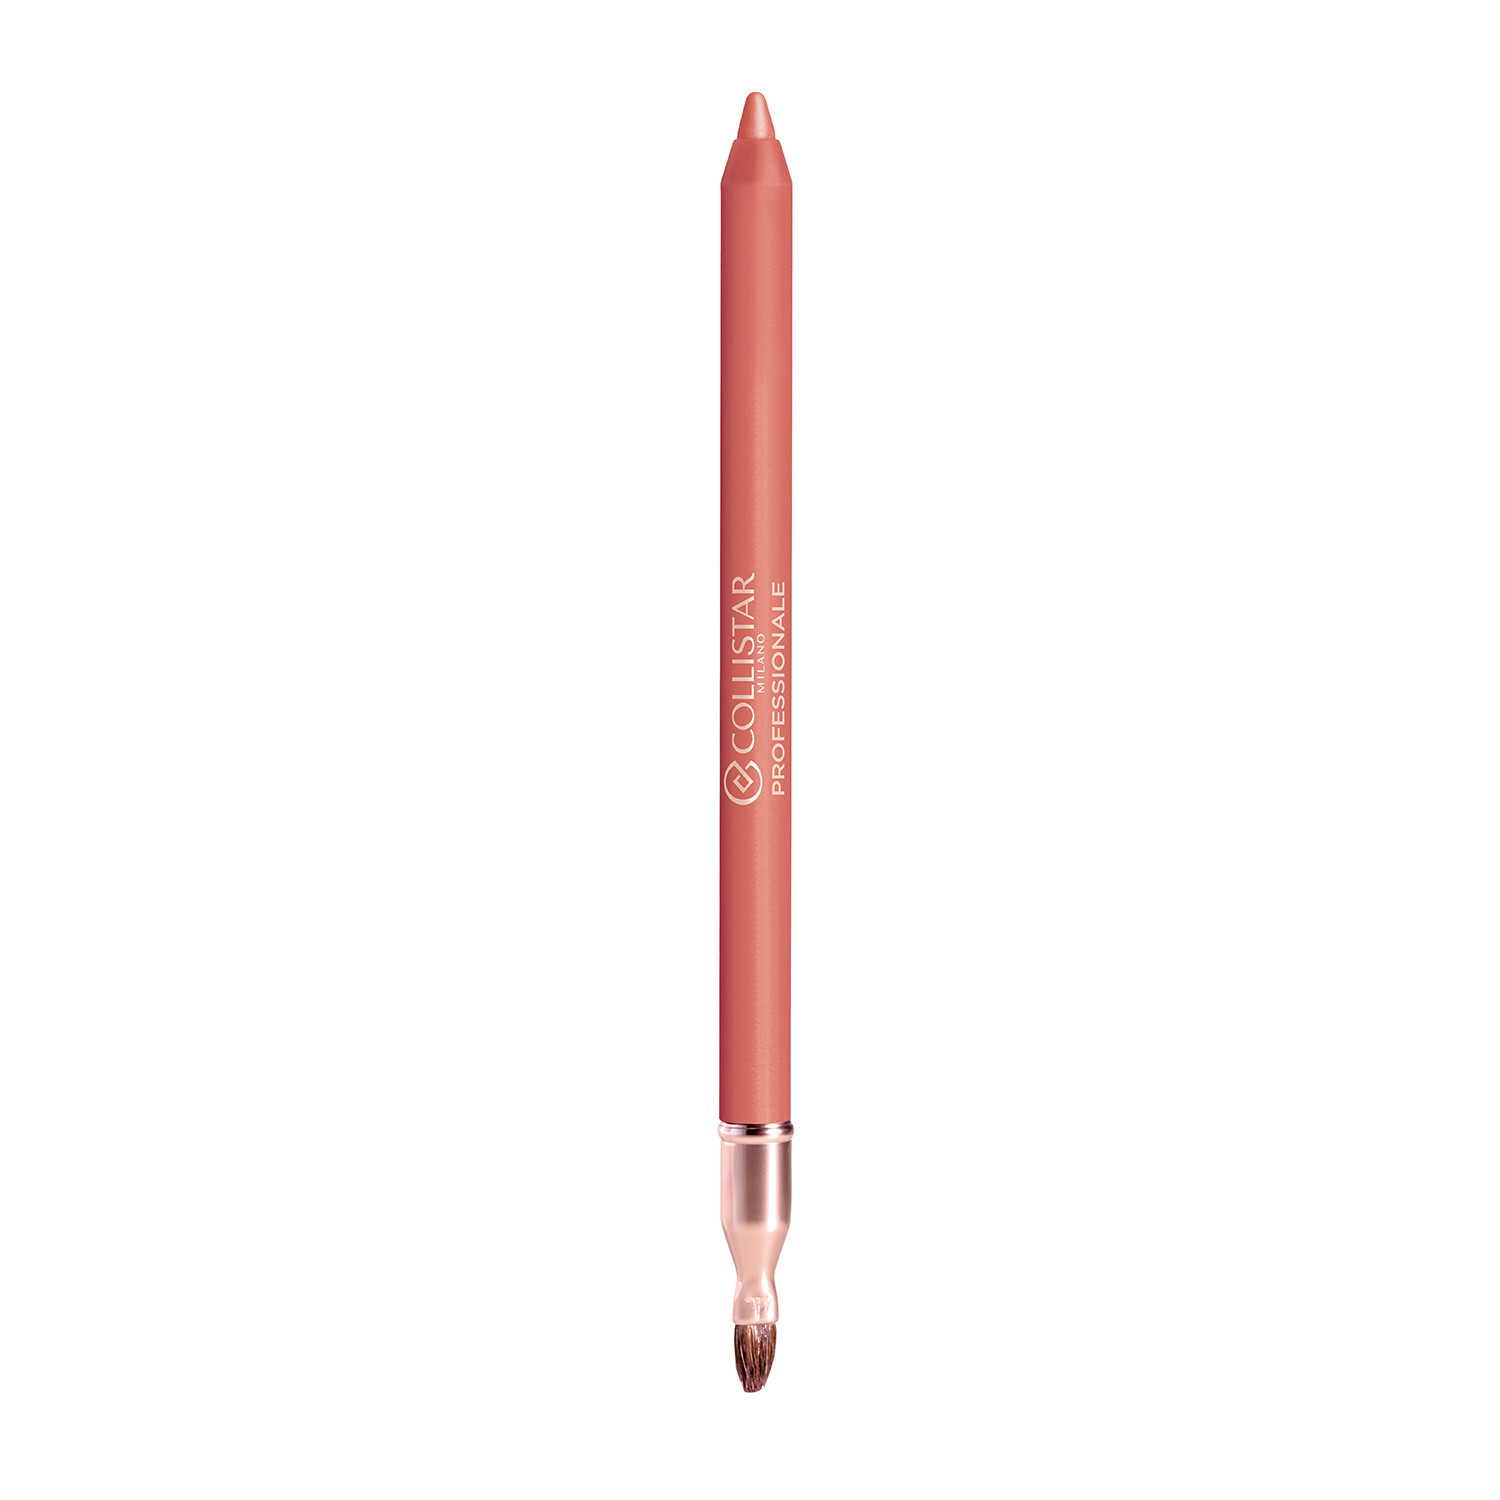 Collistar - Professional long-lasting lip pencil - 102 Antique Pink, Antique Pink, large image number 1